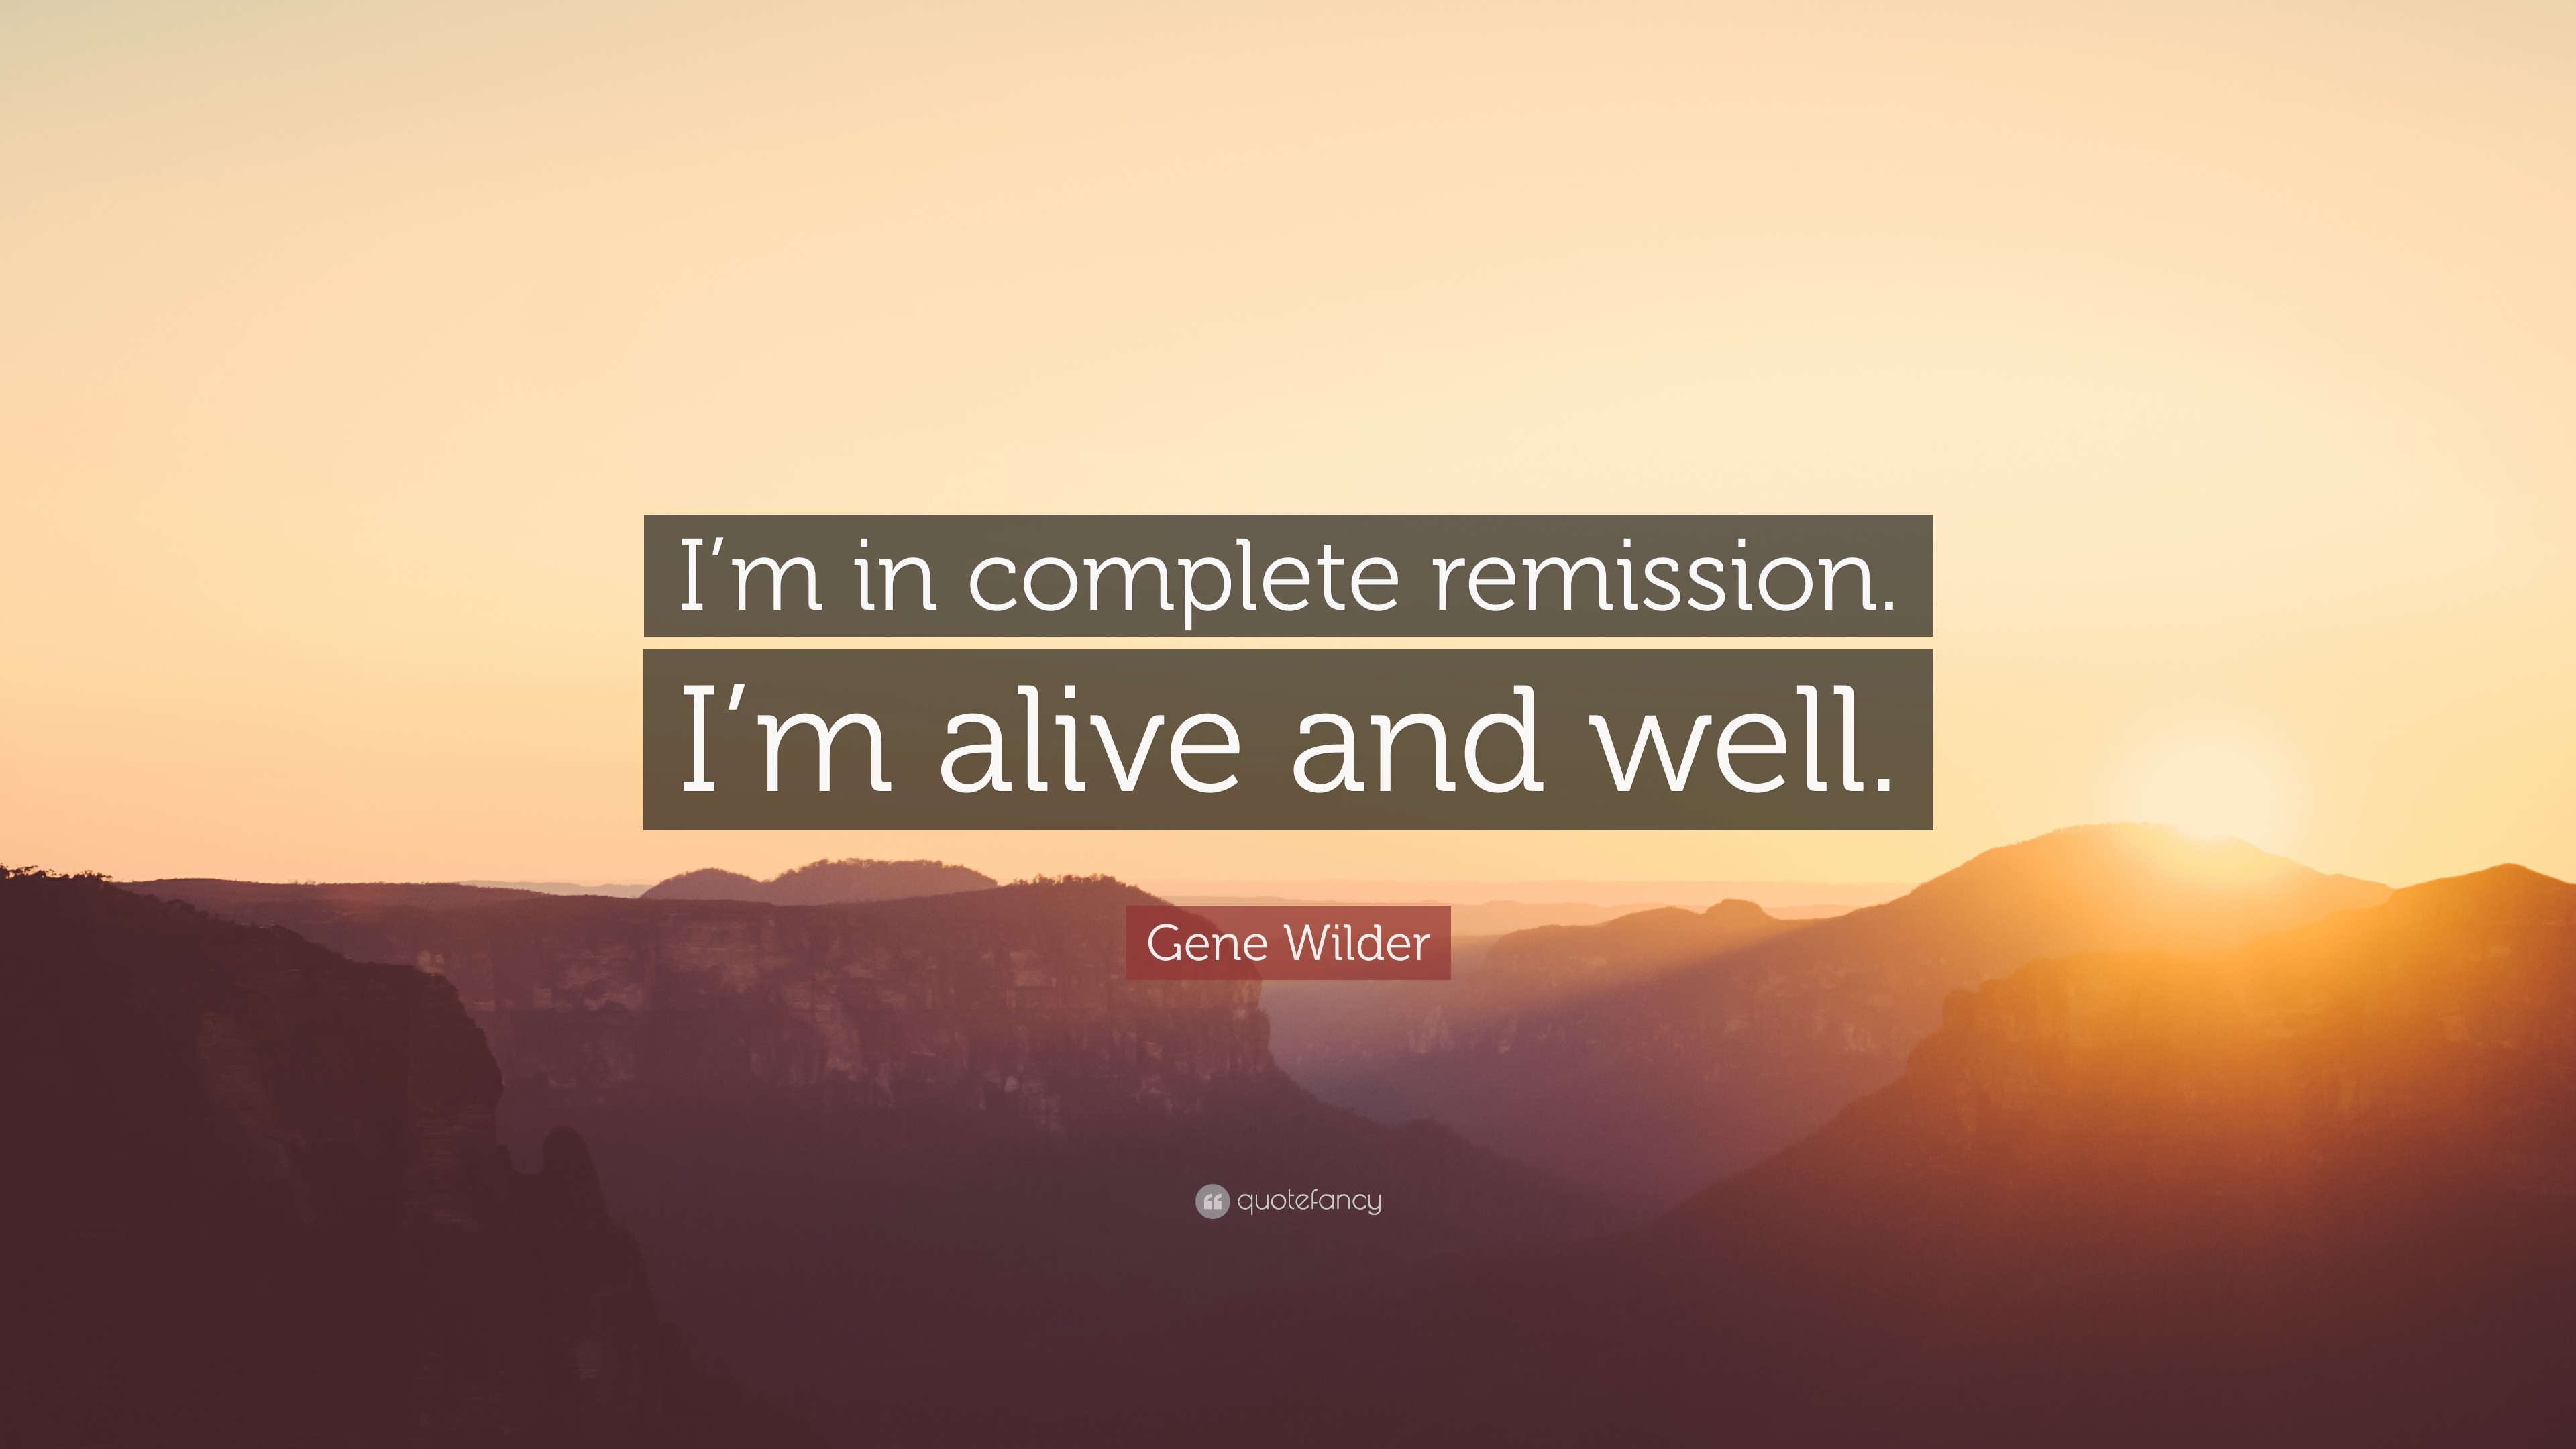 3840x2160 Gene Wilder Quote: “I'm in complete remission. I'm alive